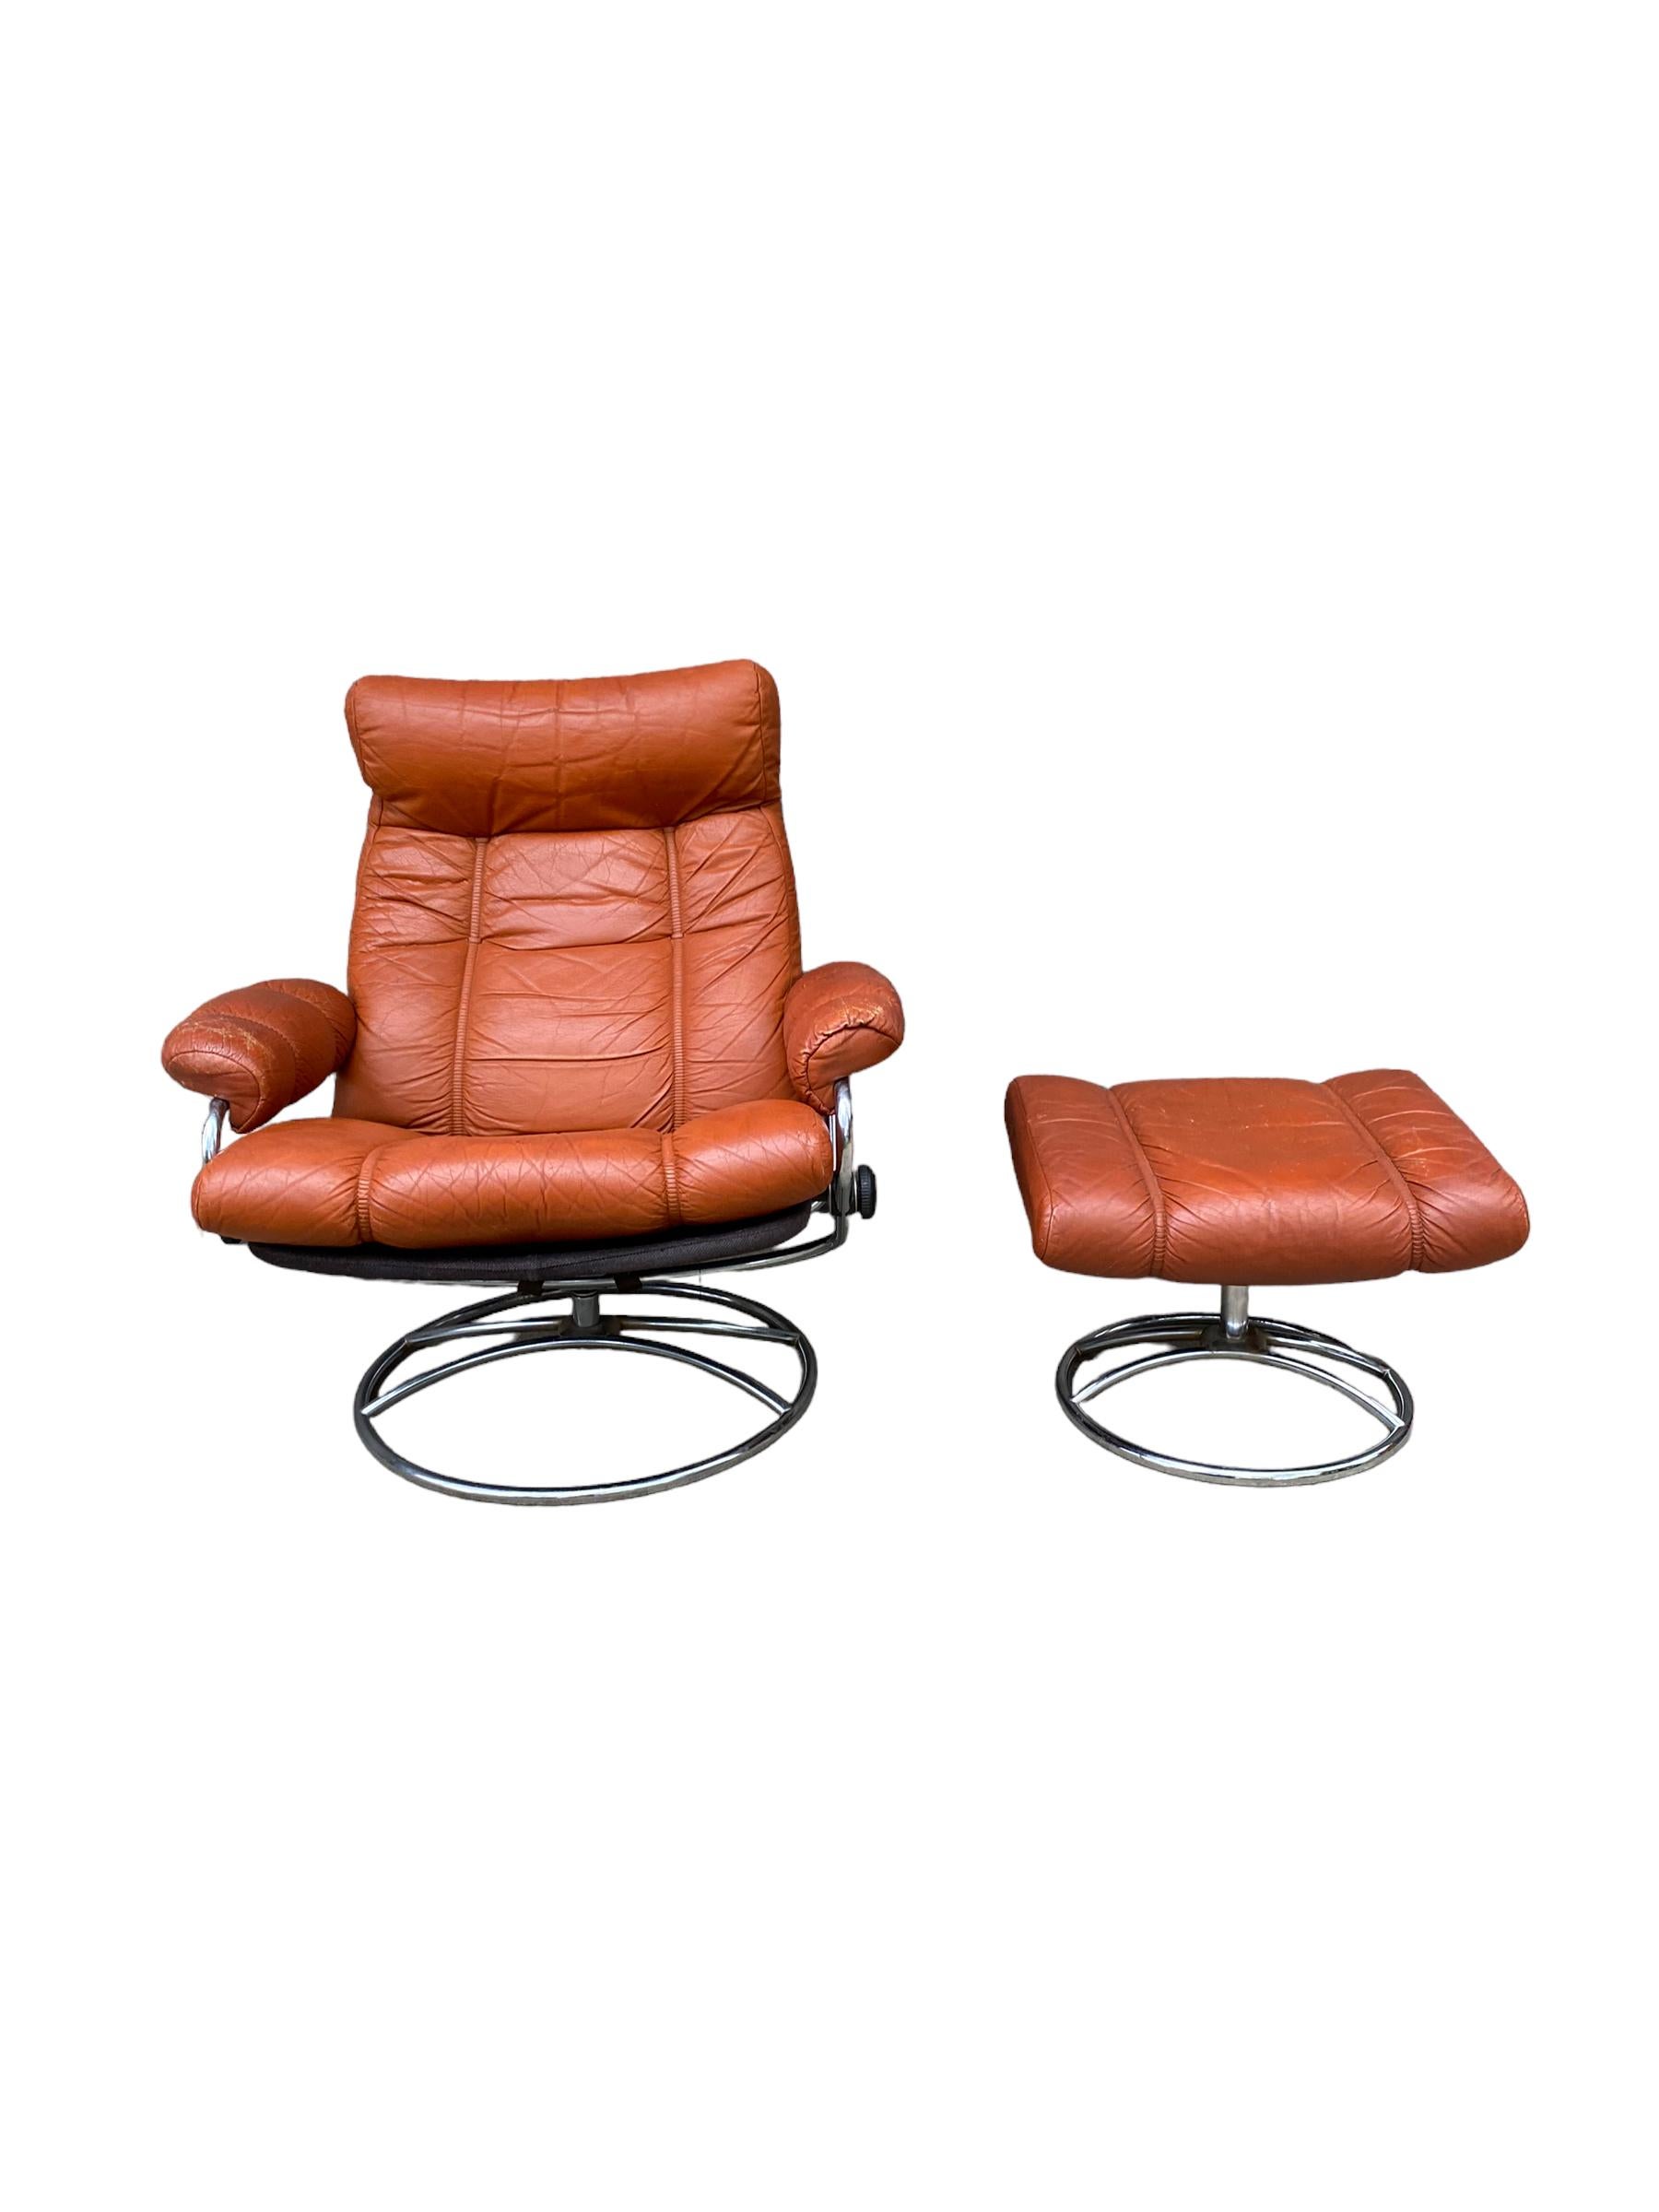 ekornes chair and ottoman